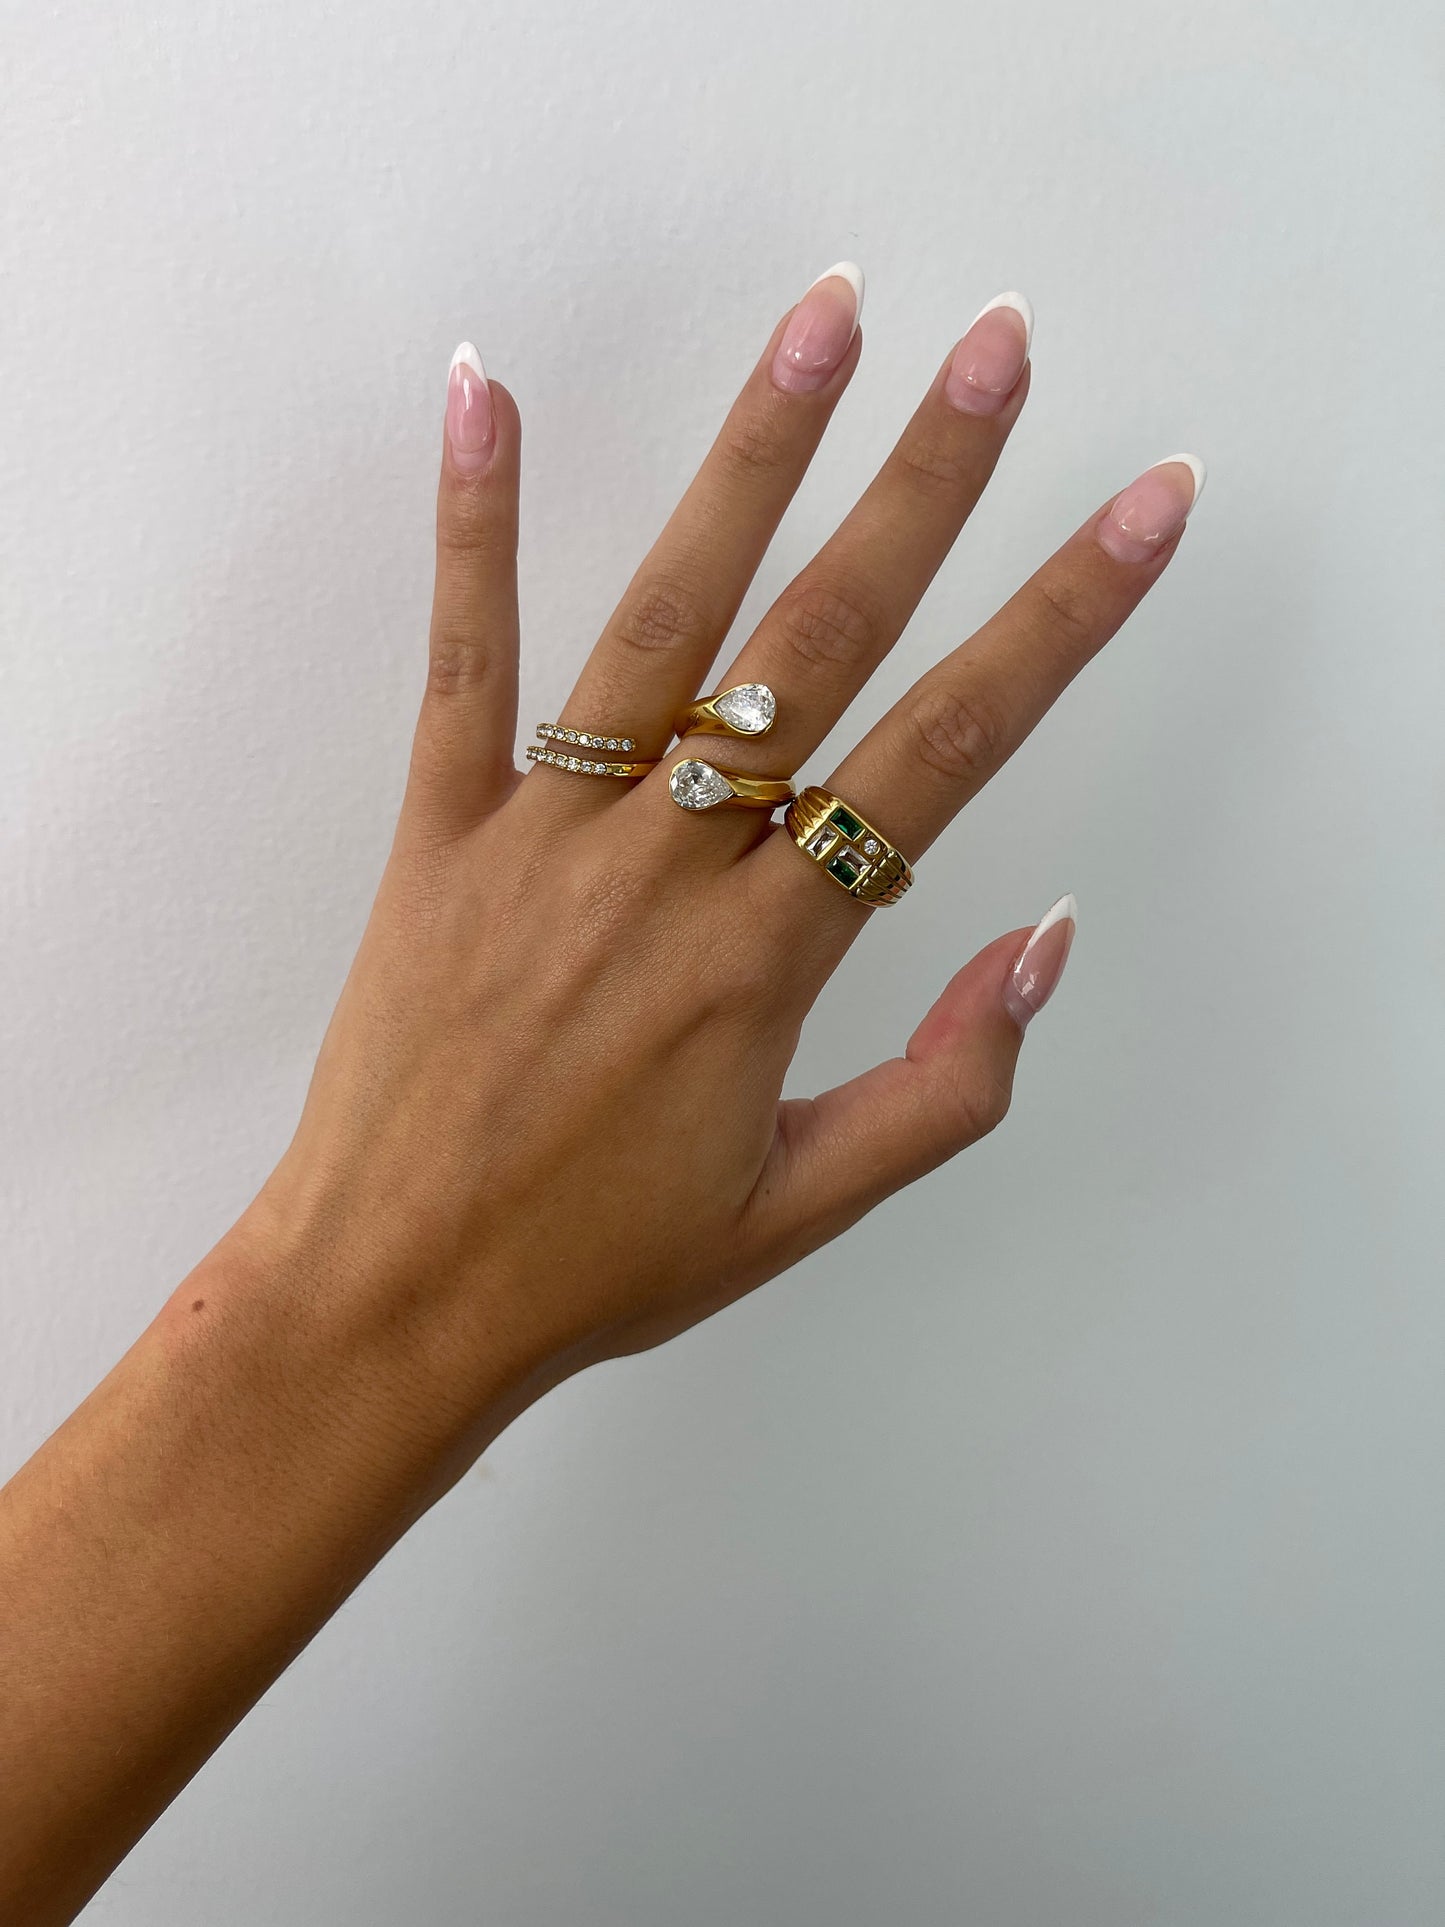 Adjustable ring gold, gold ring statement rings, wrap ring, open ring, minimalist gold adjustable ring, chunky gold ring irregular ring